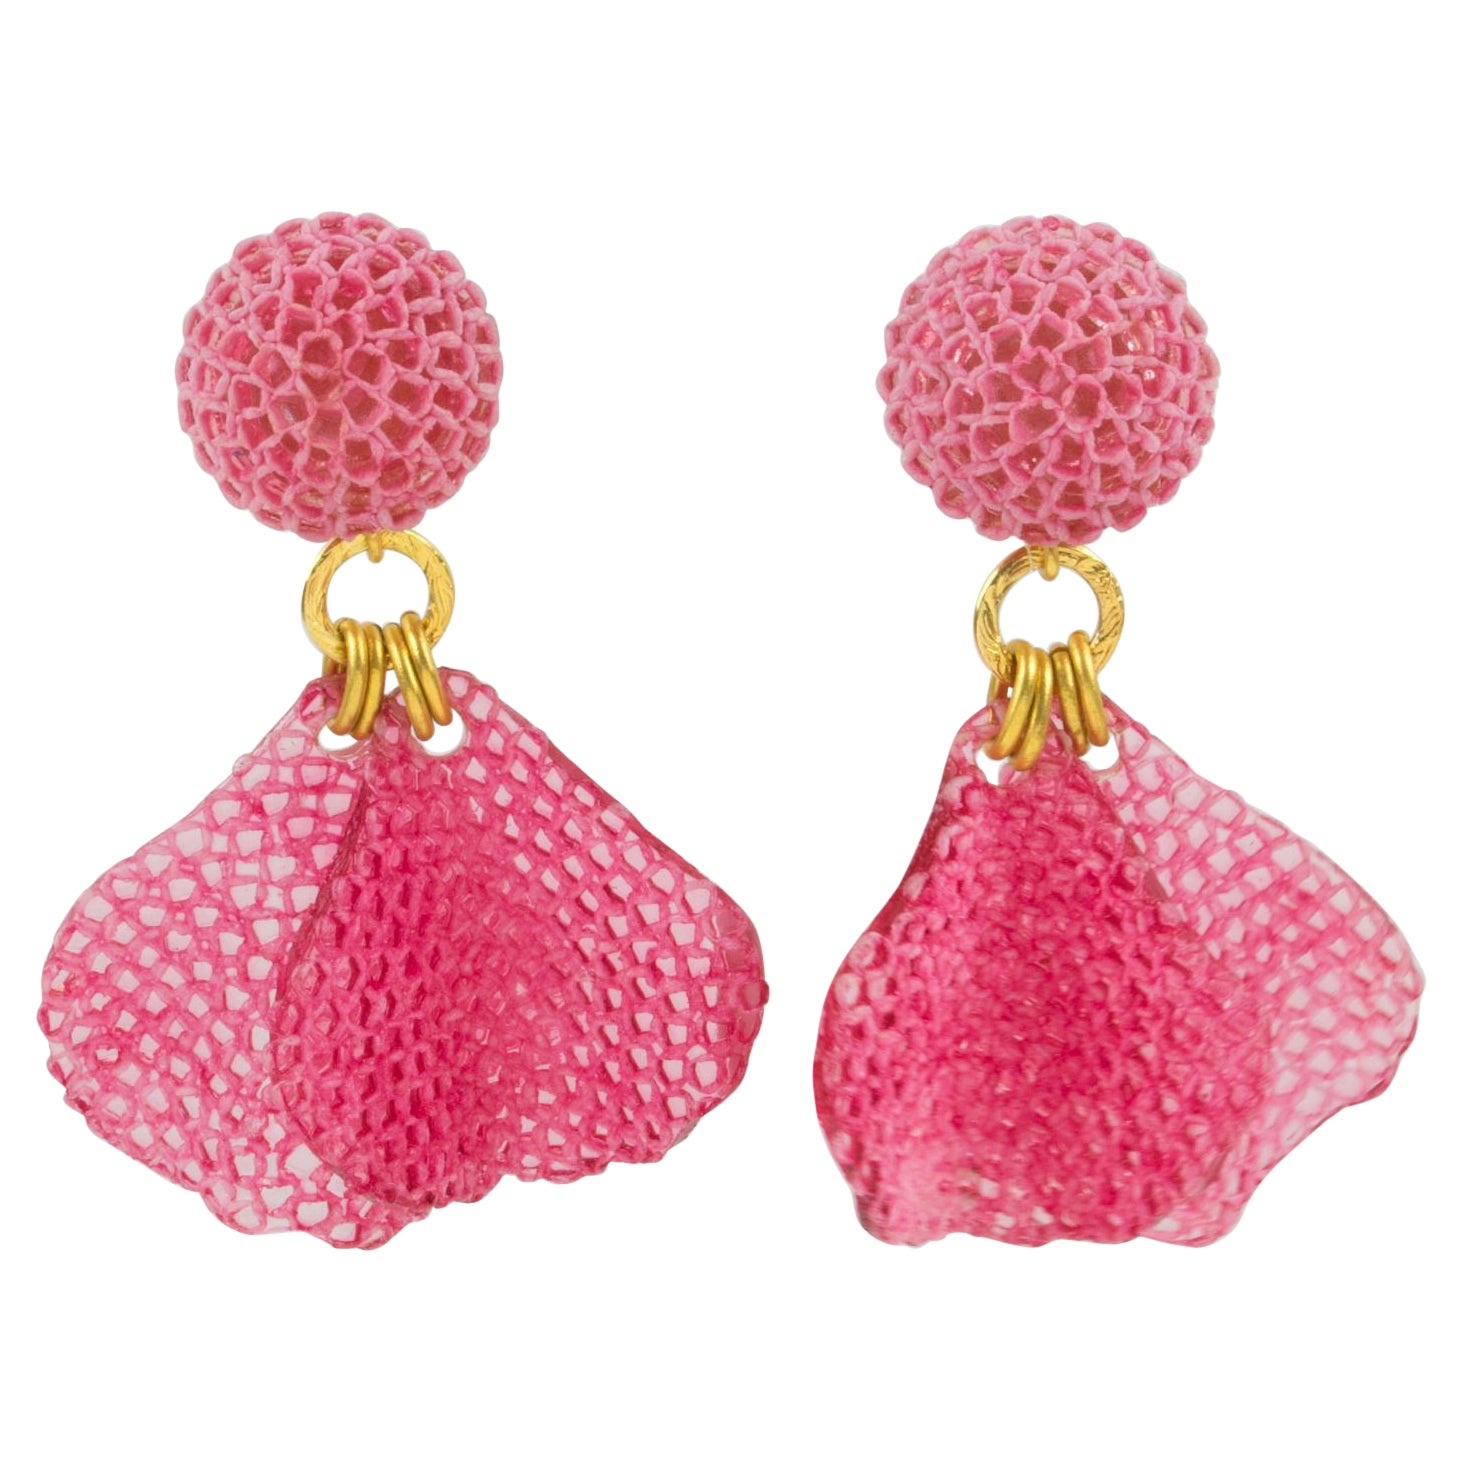 Francoise Montague by Cilea Resin Clip Earrings Dangle Pink Petals